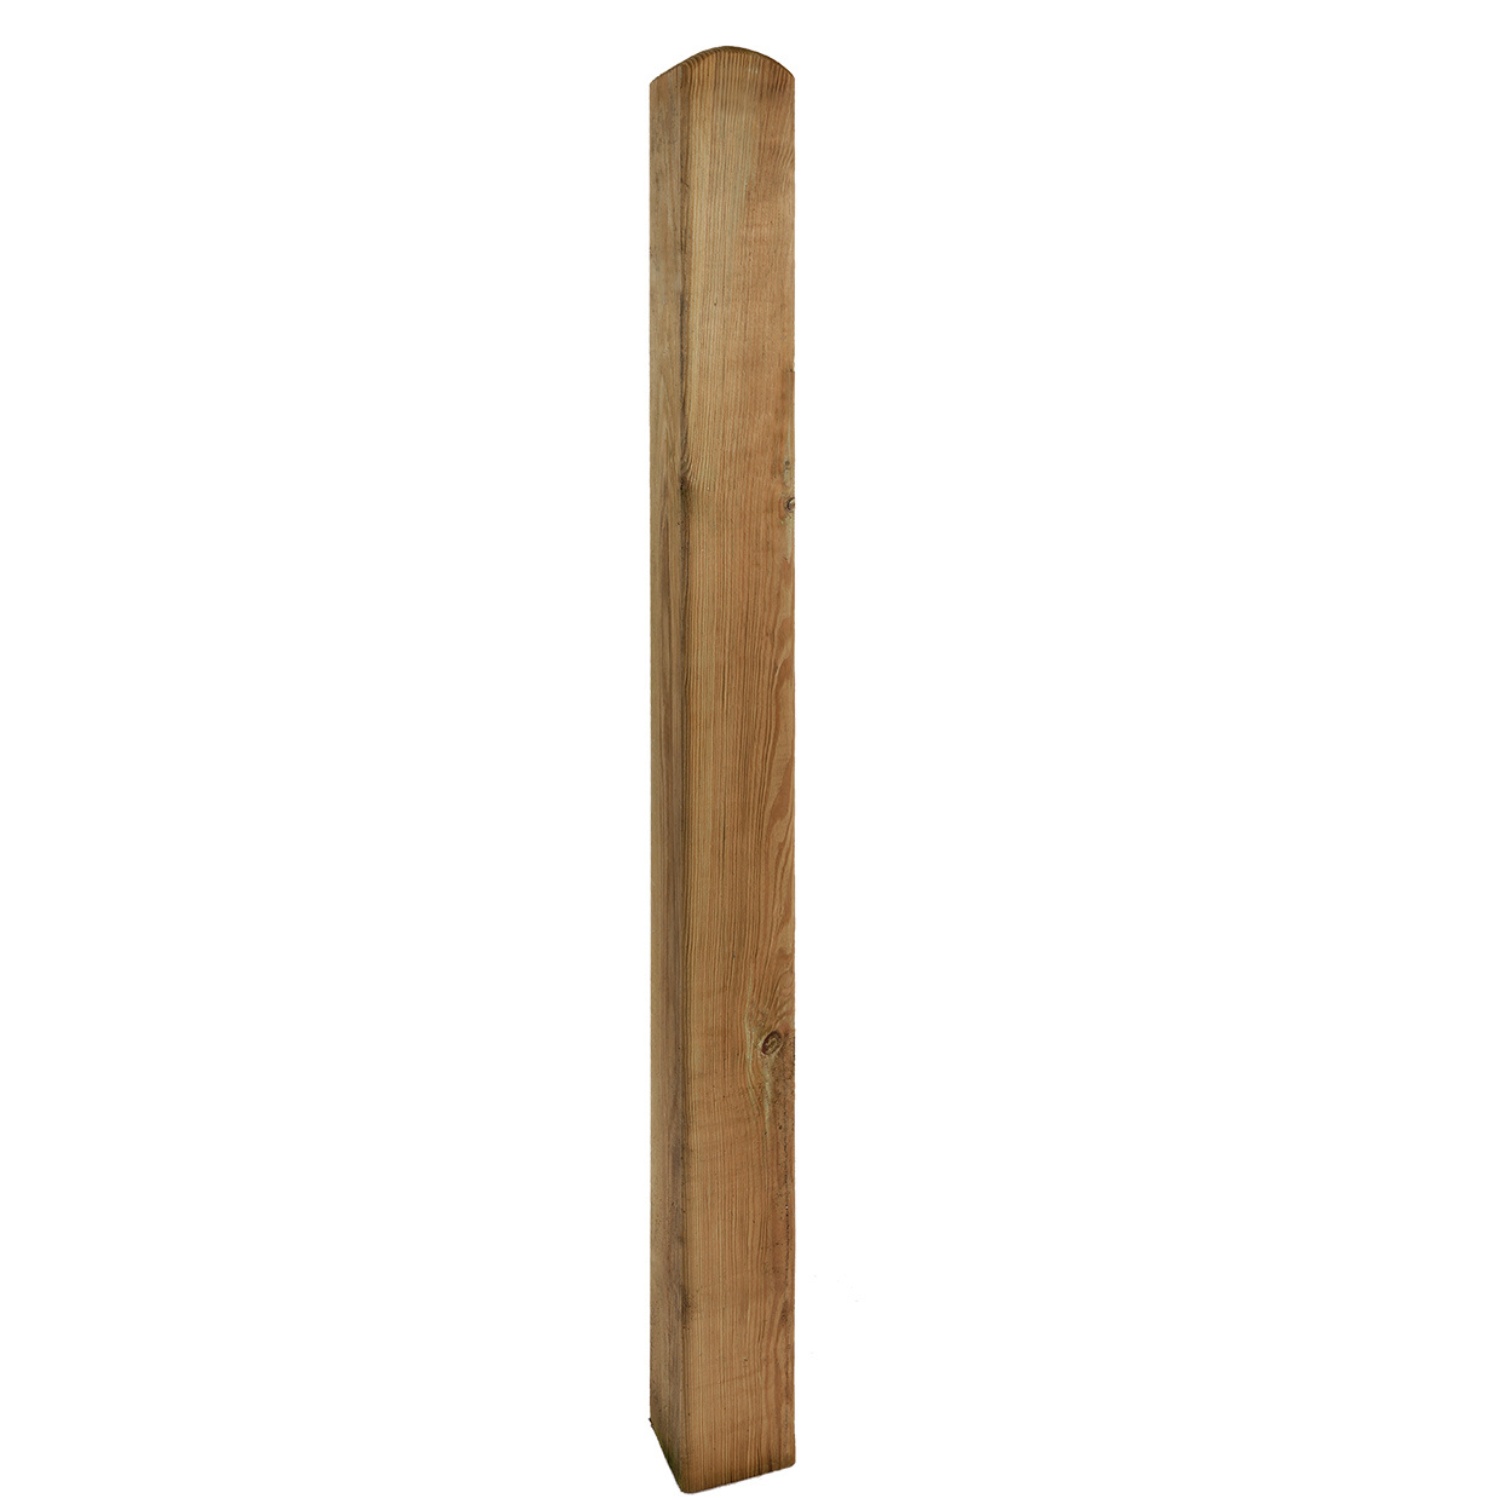 Holzpfosten 9cm x 9cm x 110cm mit Rundkopf KDI-grün Kantholz